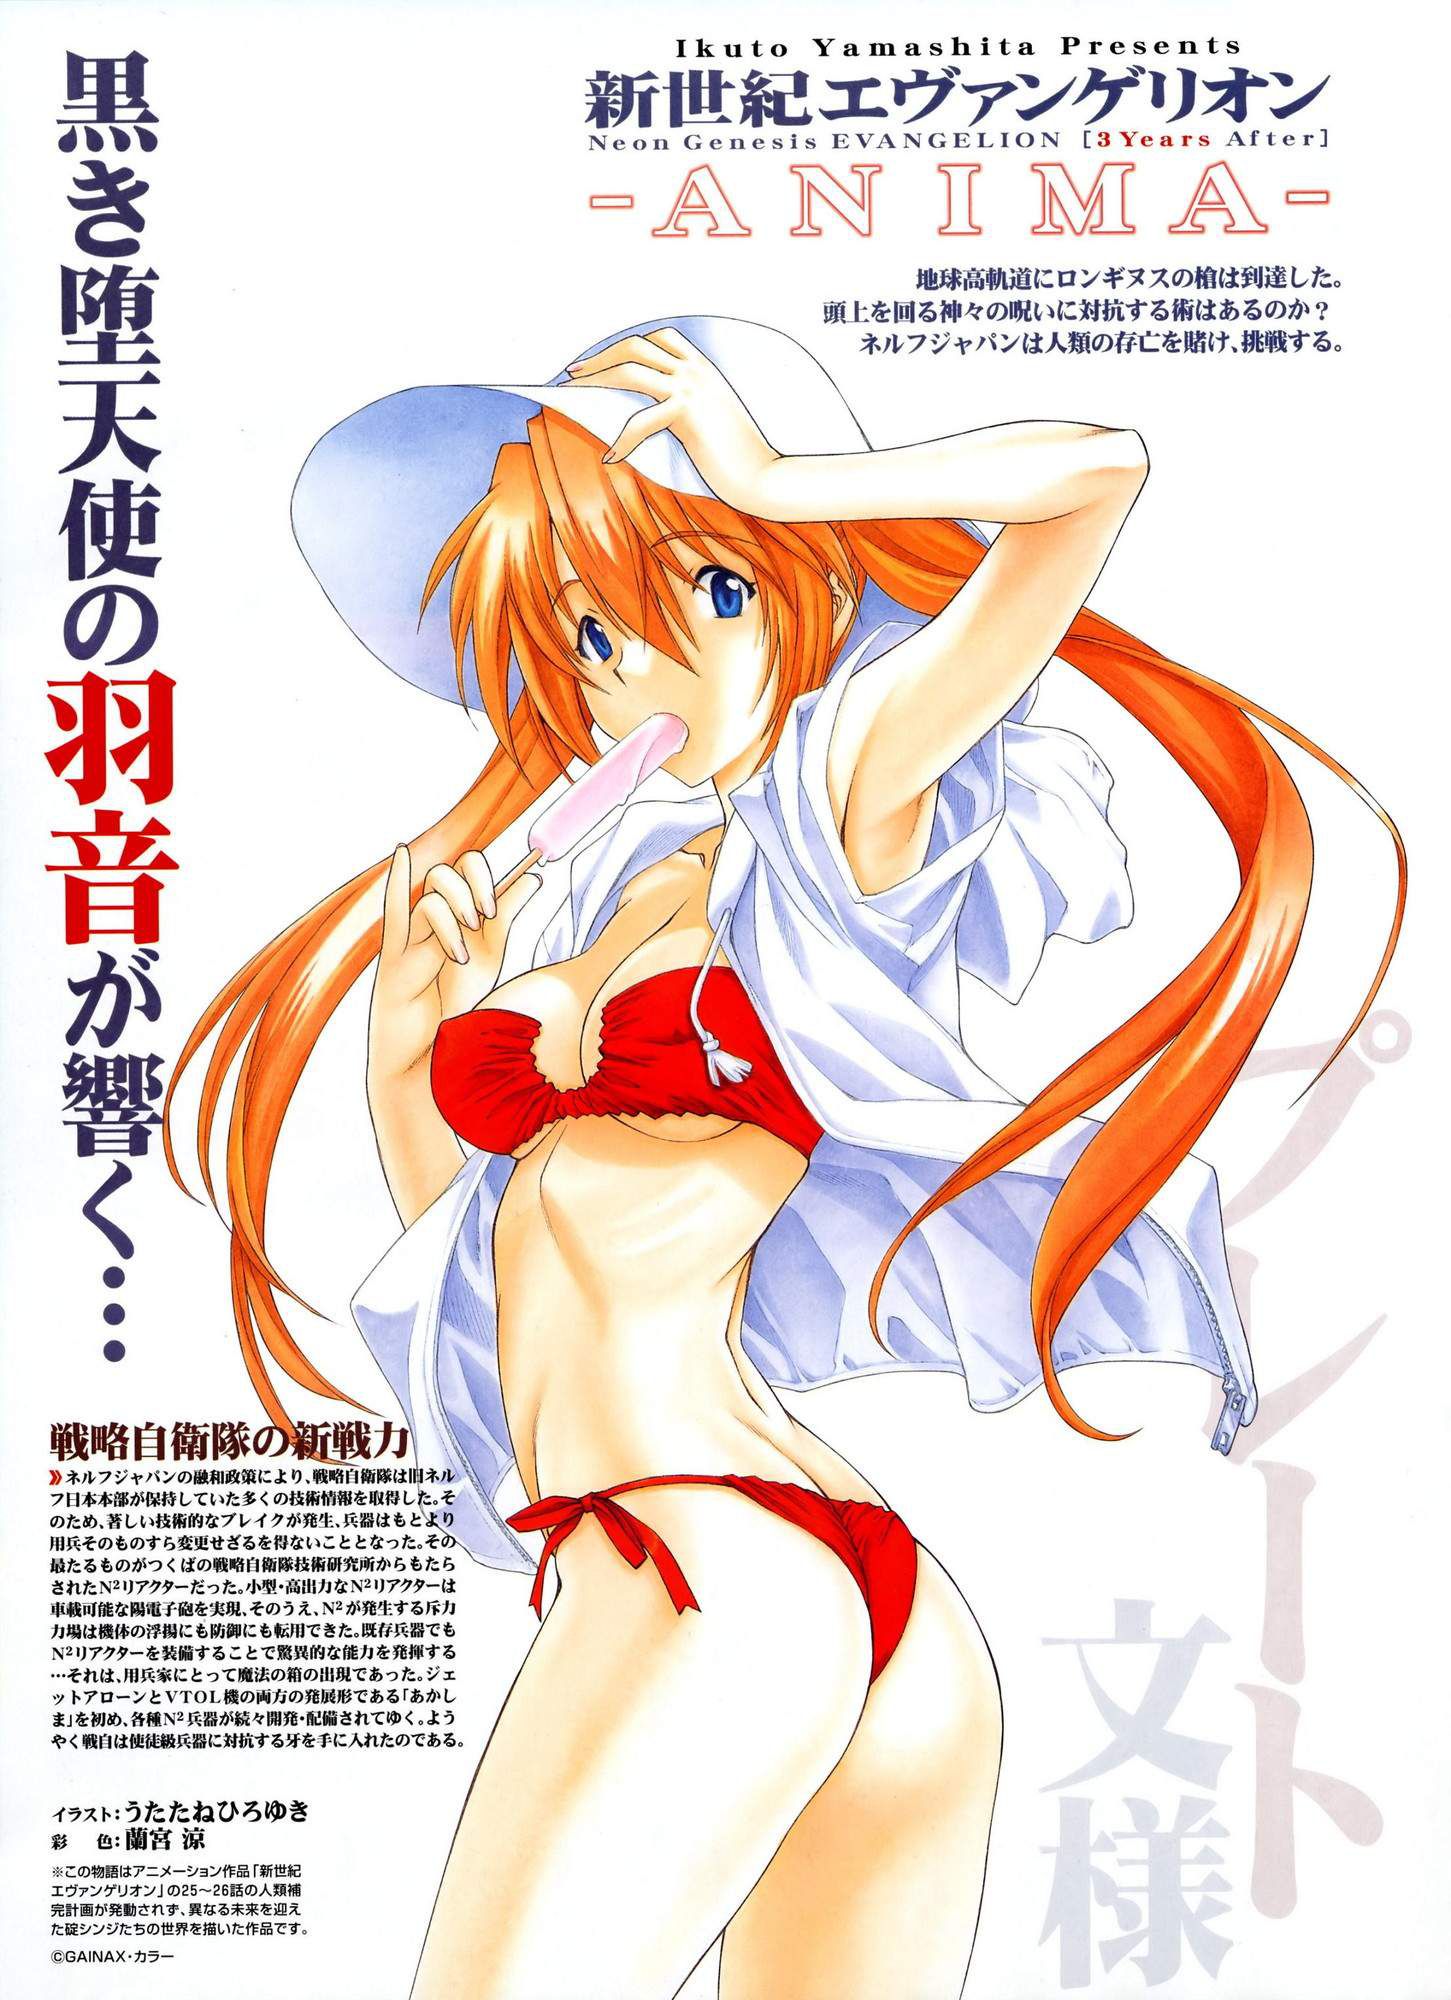 [Evangelion] MoE (Soryu) shikinami Asuka Langley & erotic pictures complement Laskin anyway (1) 46